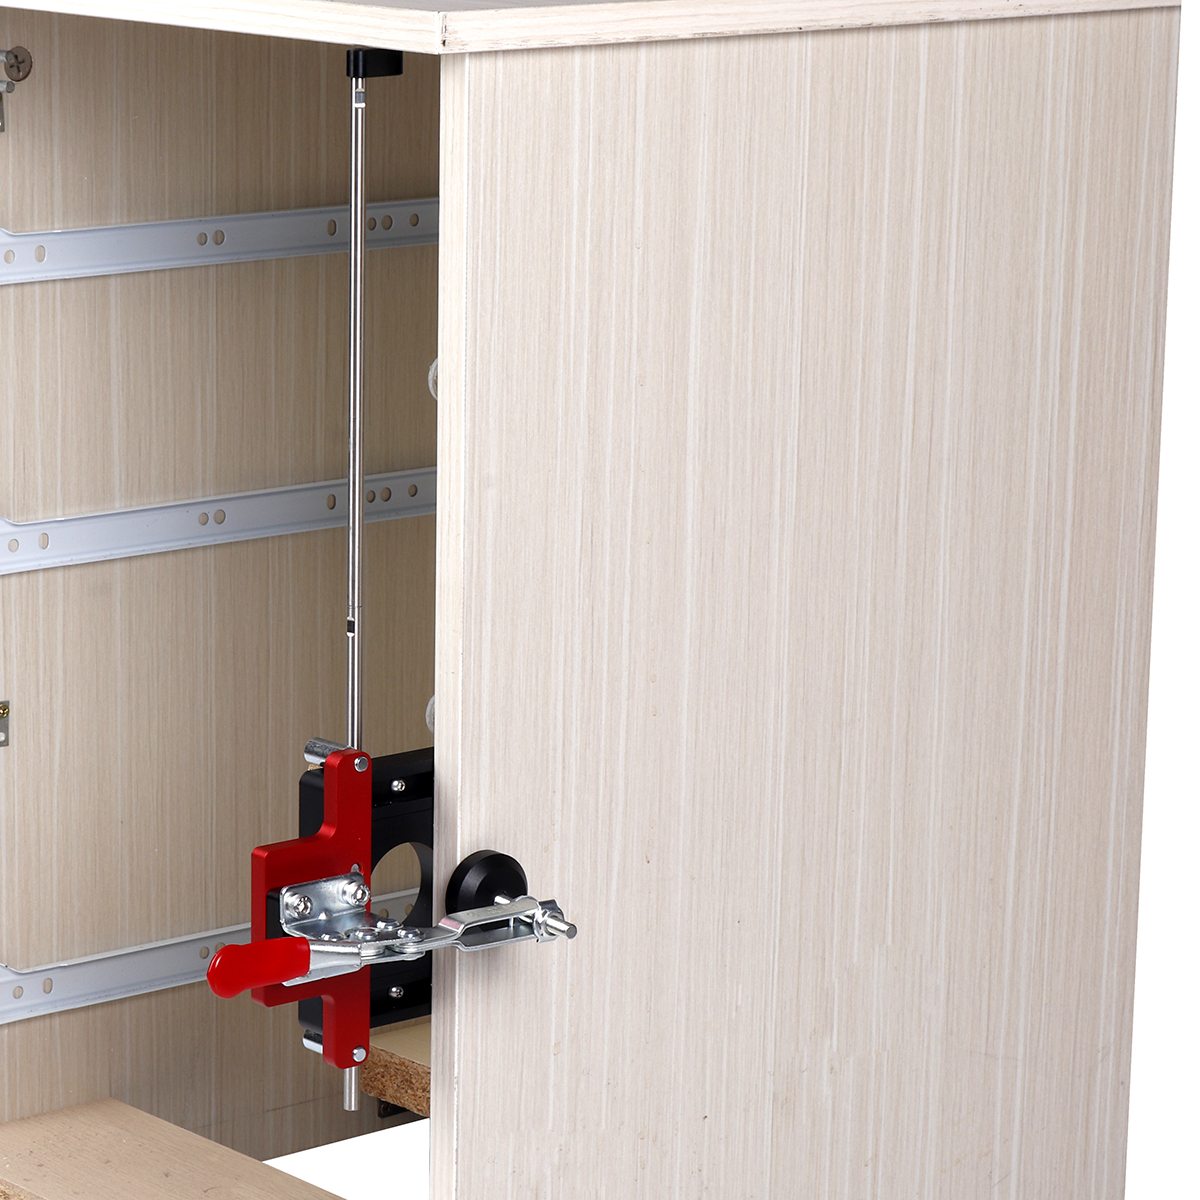 VEIKO-Aluminum-Alloy-Drawer-Slide-Jig-with-Adjustable-Clamp-for-Woodworking-Cabinet-Drawer-Slide-Ins-1911234-10